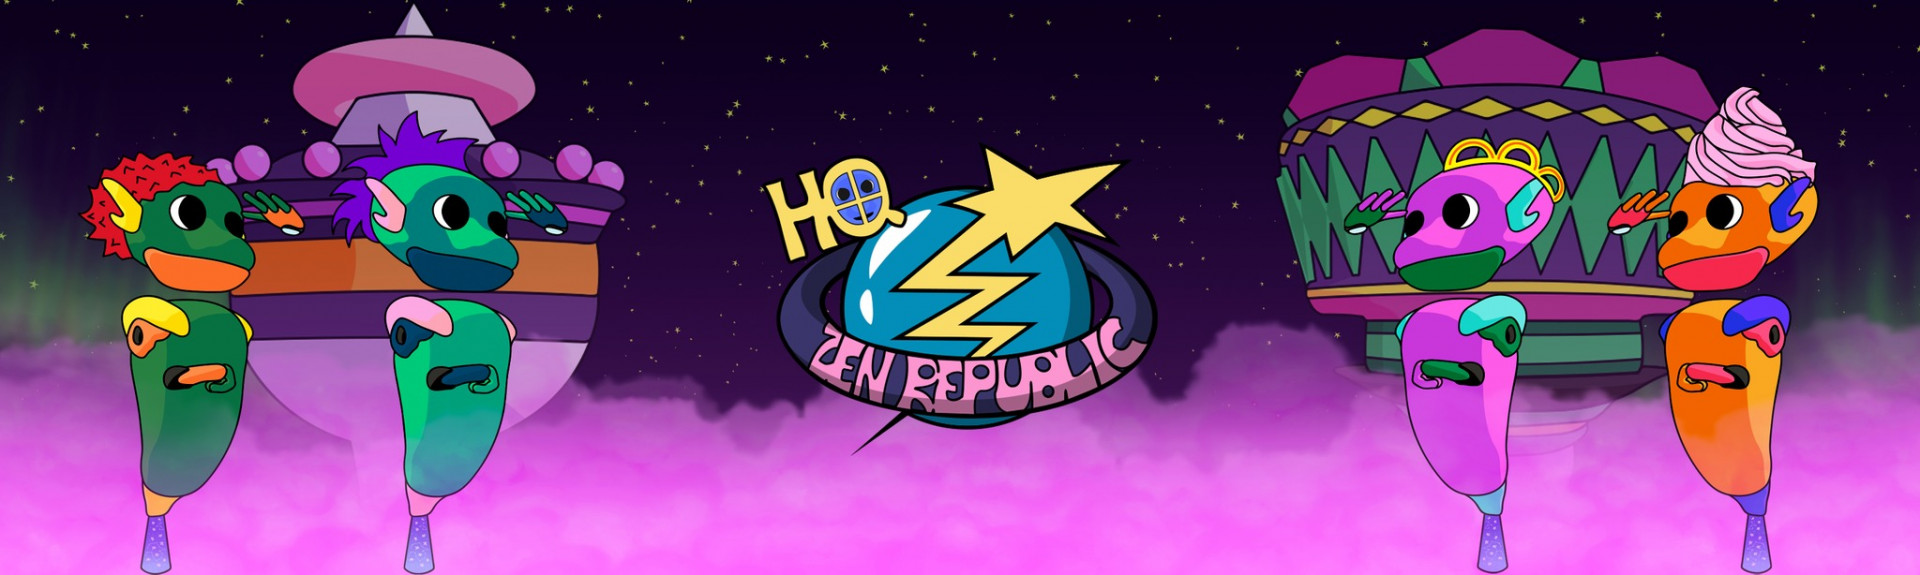 Zen Republic HQ